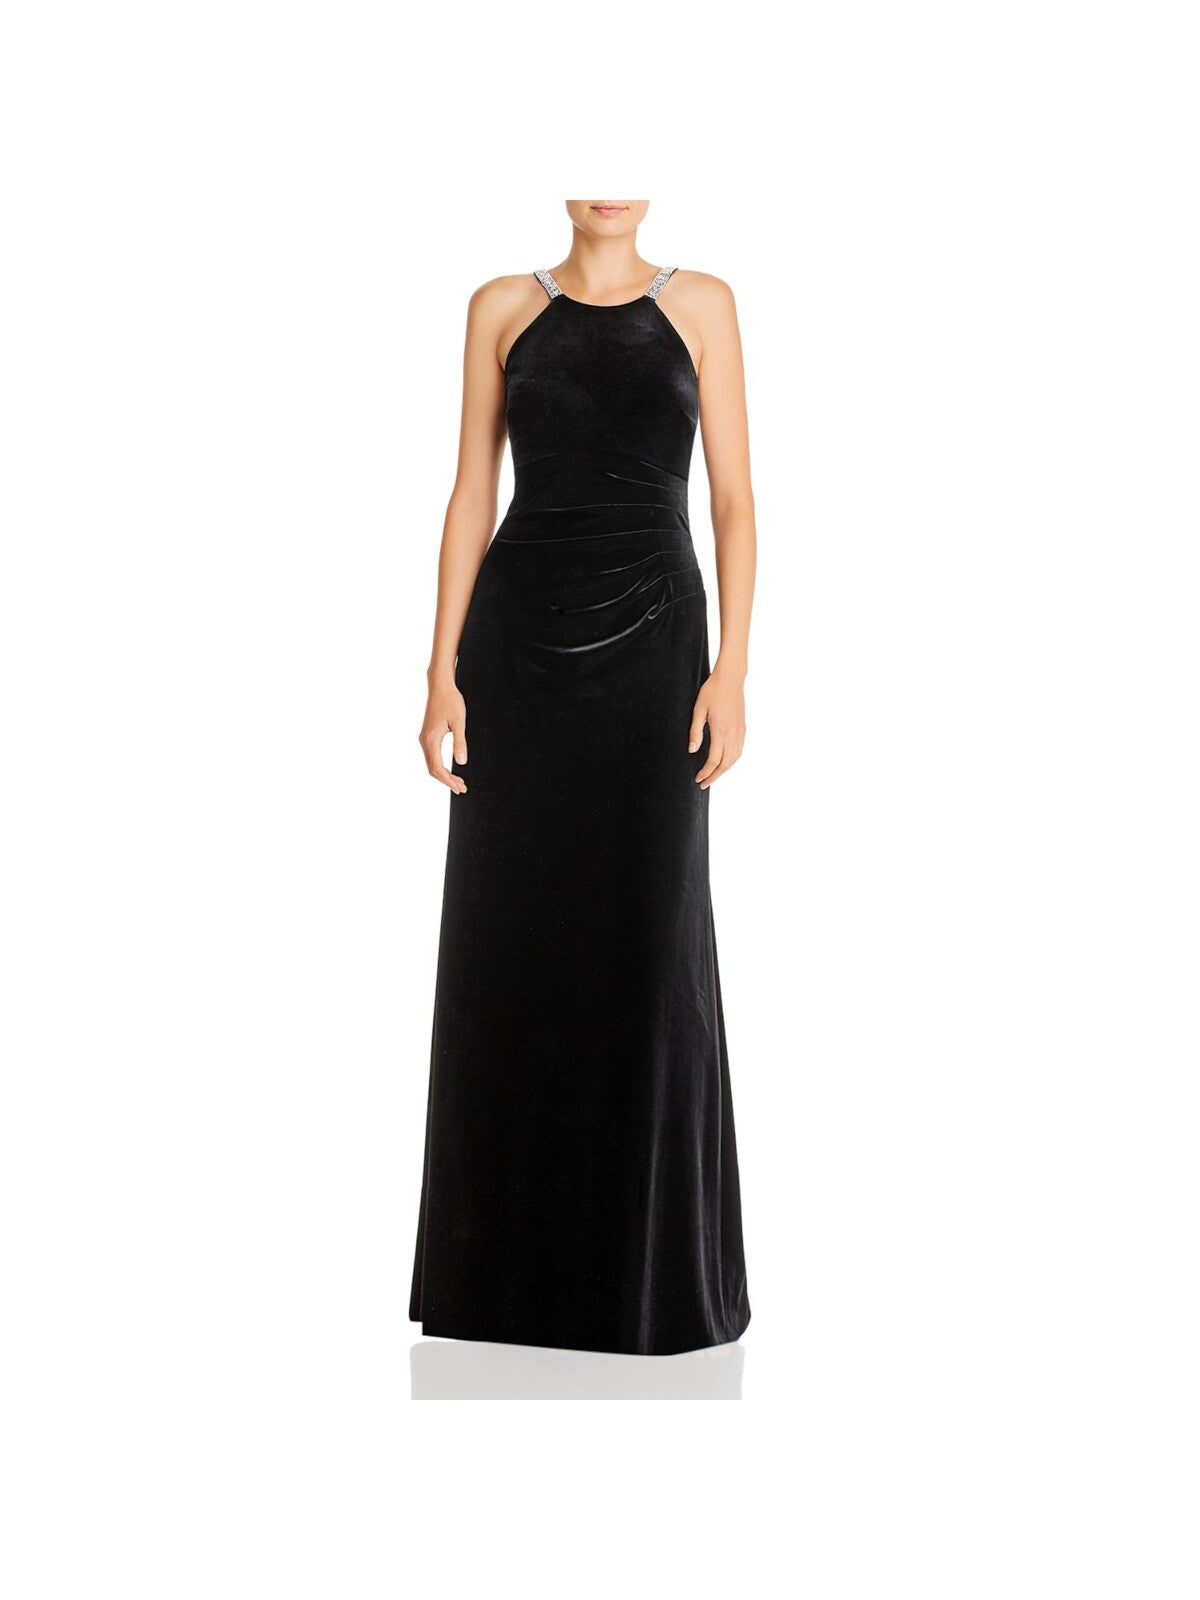 AQUA FORMAL Womens Black Textured Zippered Rhinestone Straps Lined Pleated Sleeveless Jewel Neck Full-Length Evening Gown Dress 2